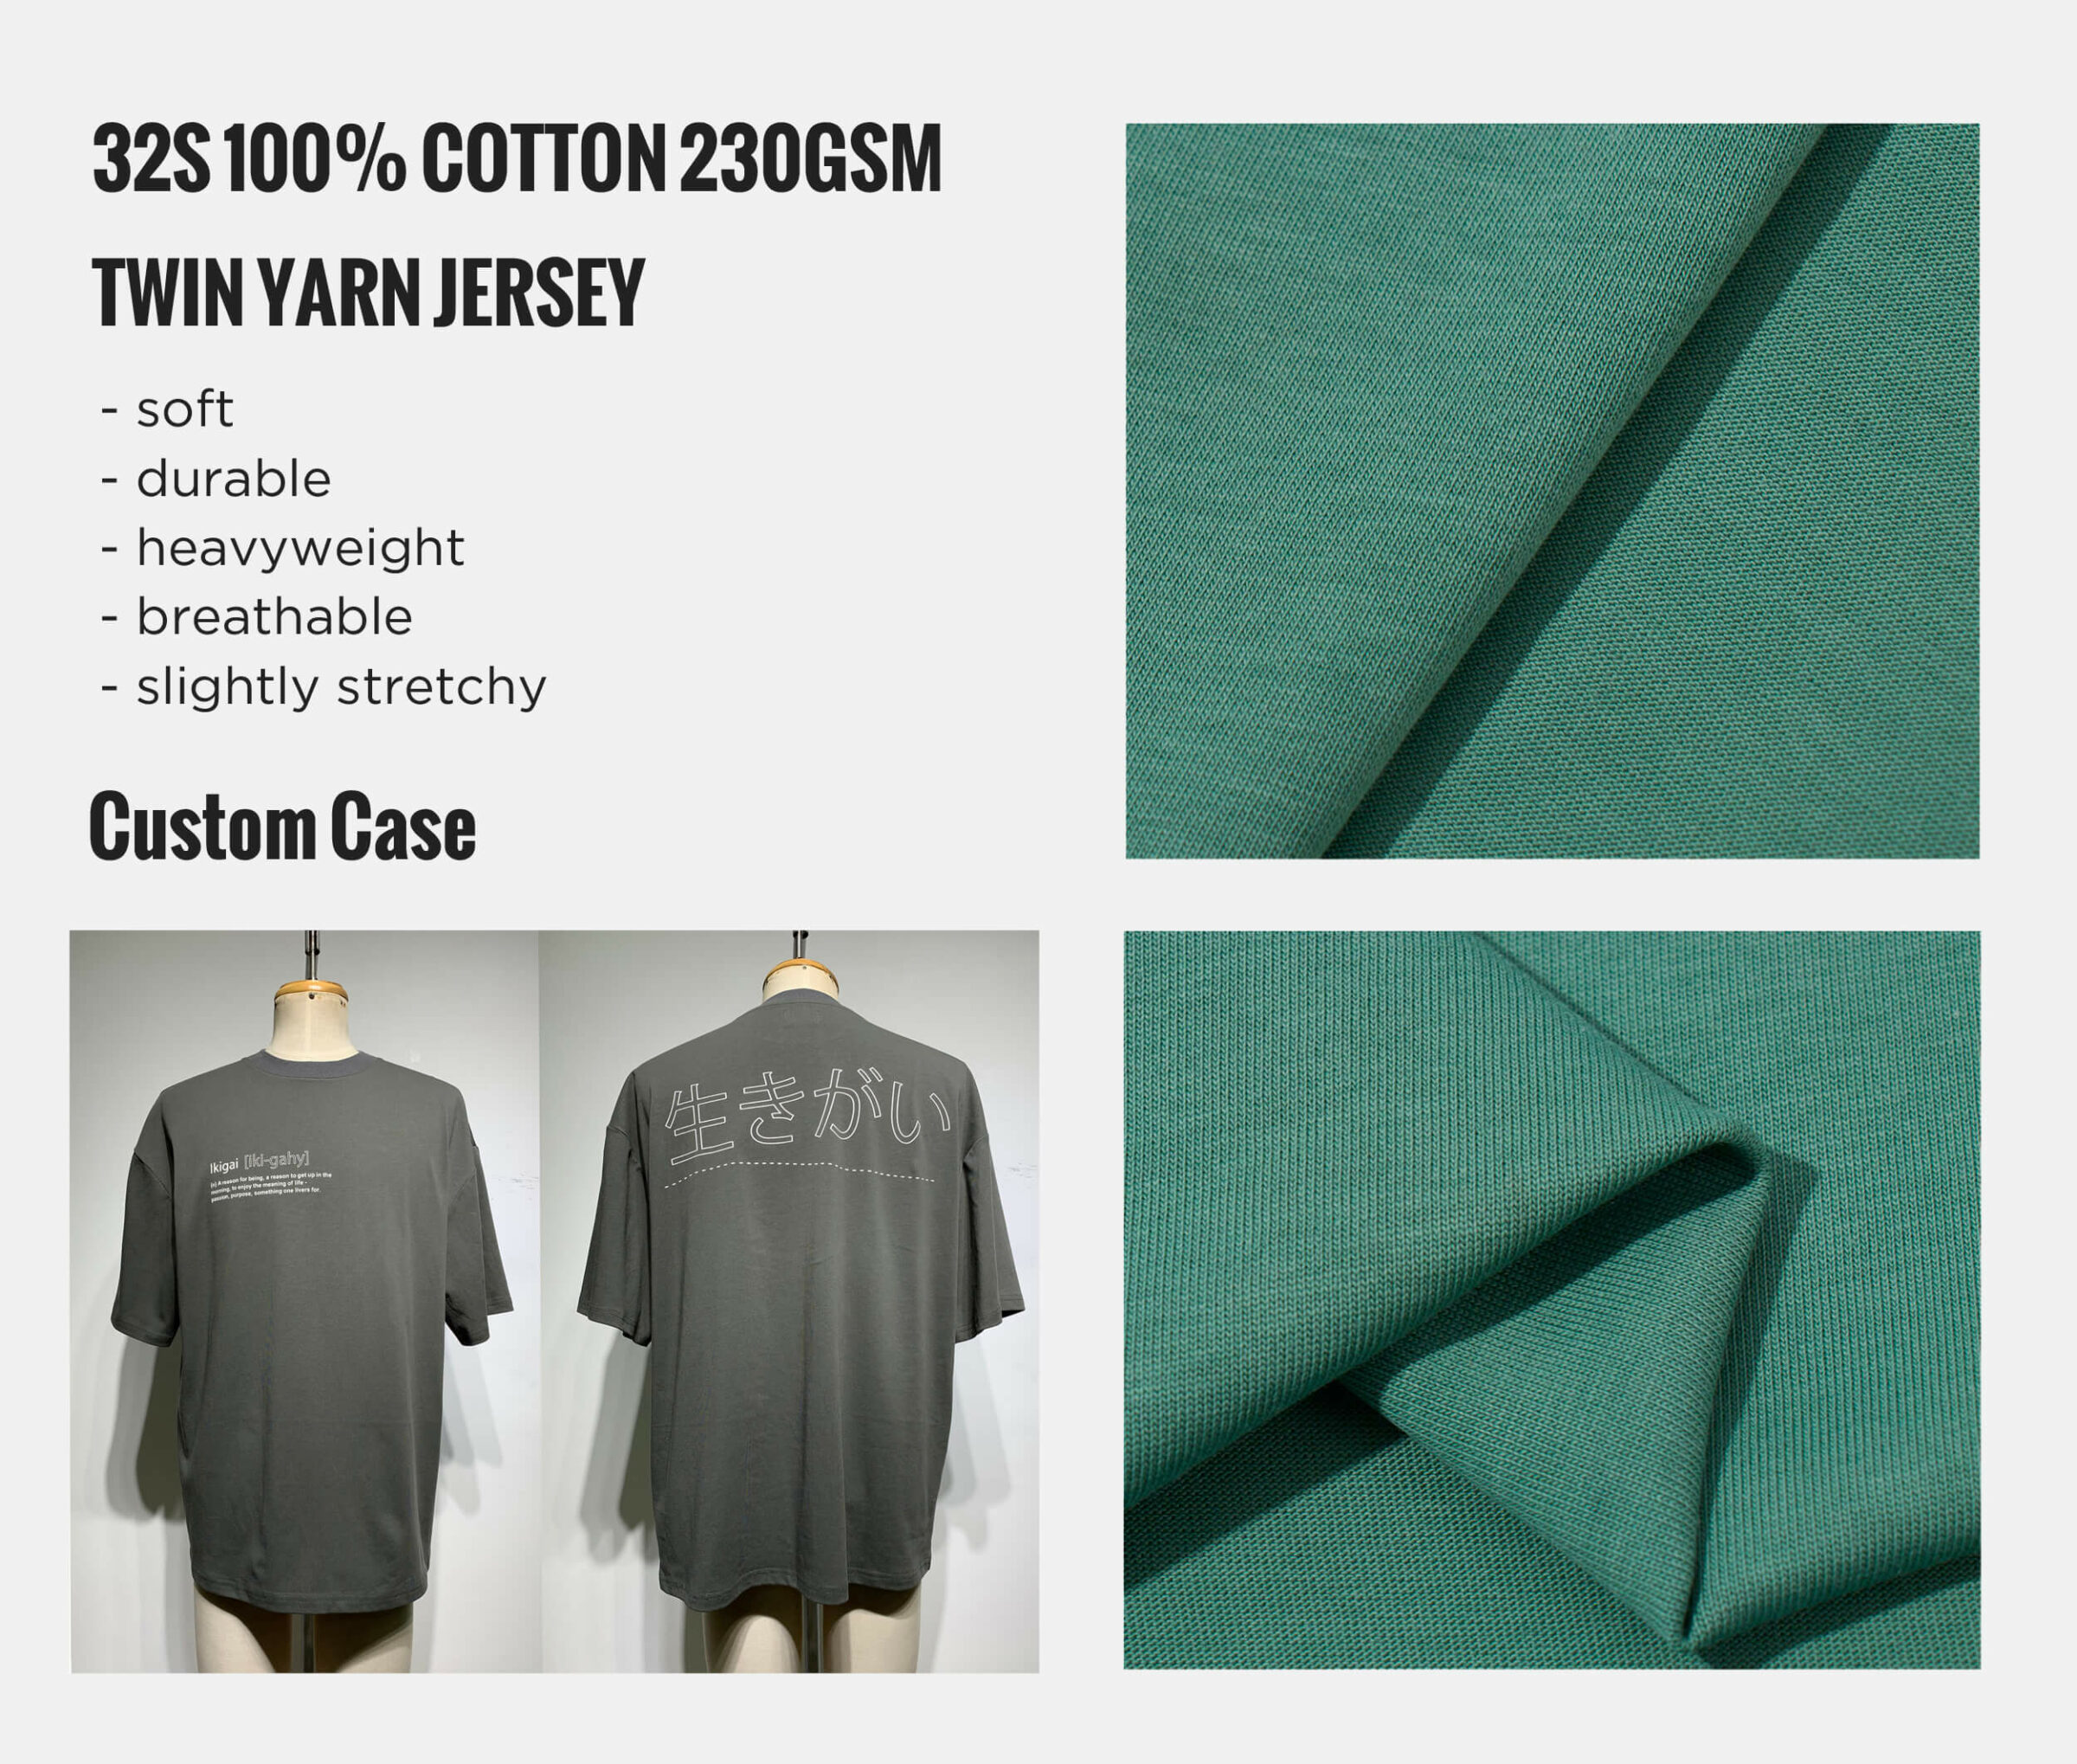 32s 100%cotton 230gsm twin yarn jersey